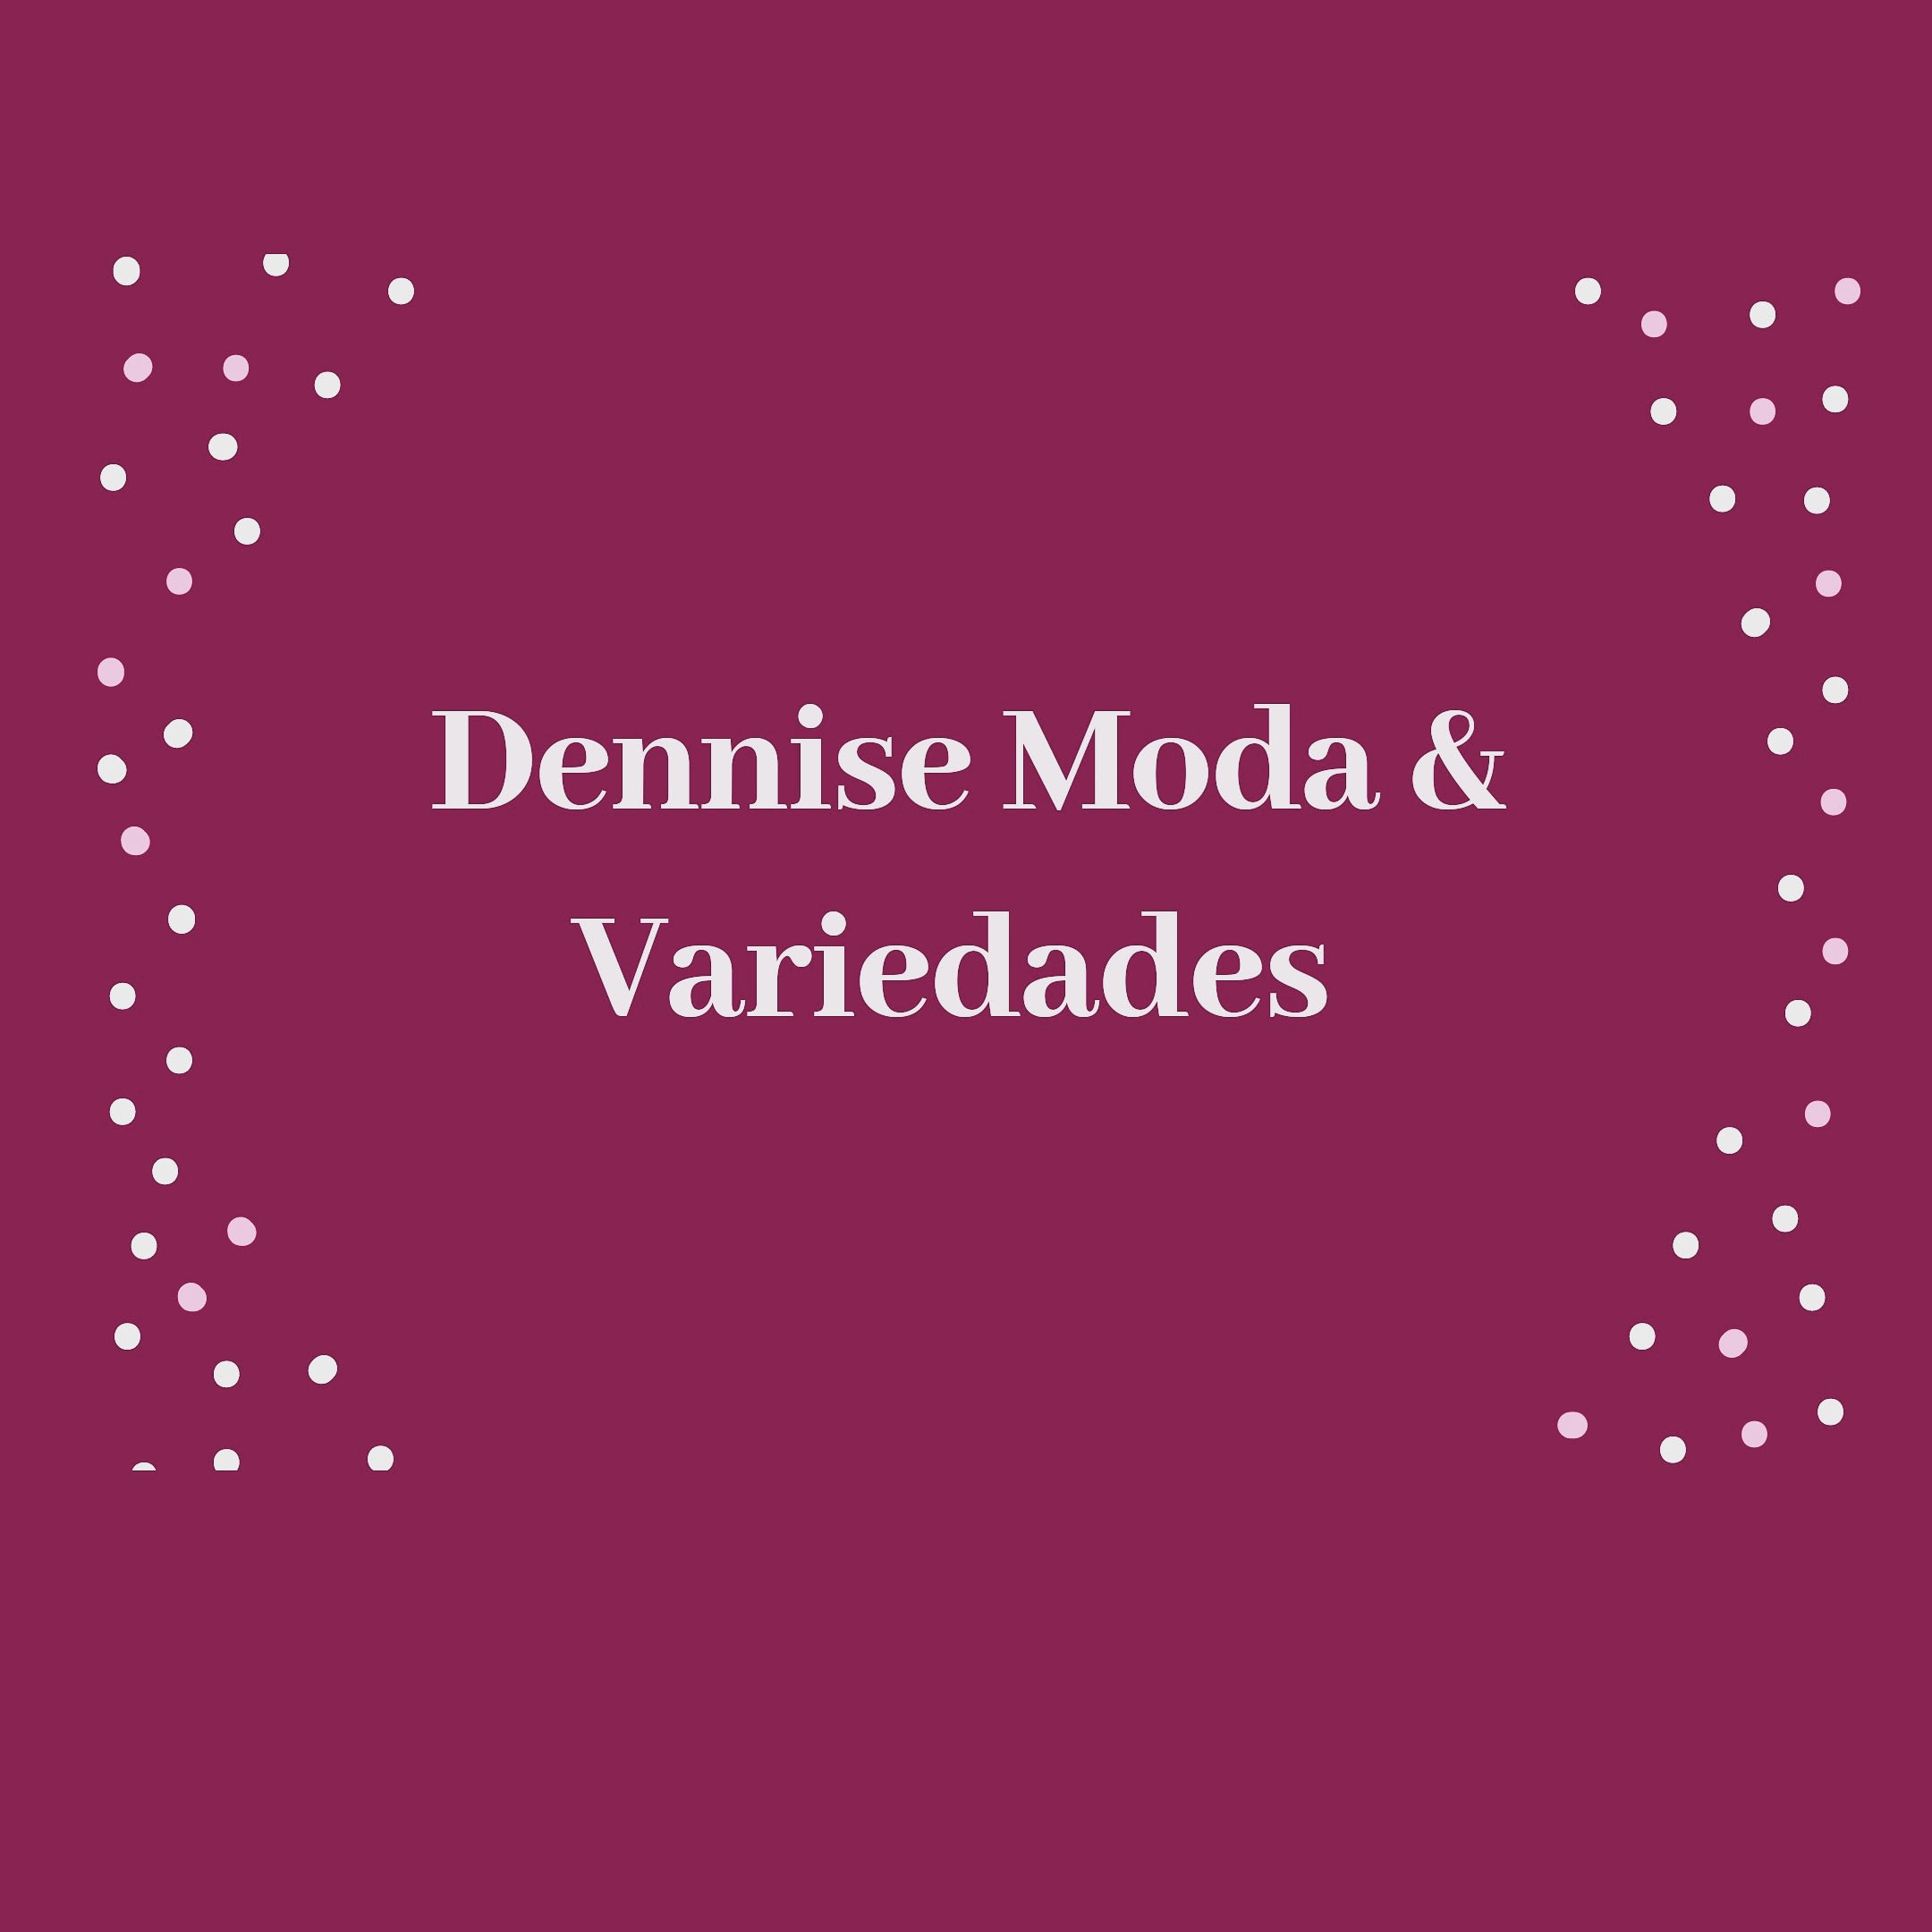 Dennise Moda & Variedades